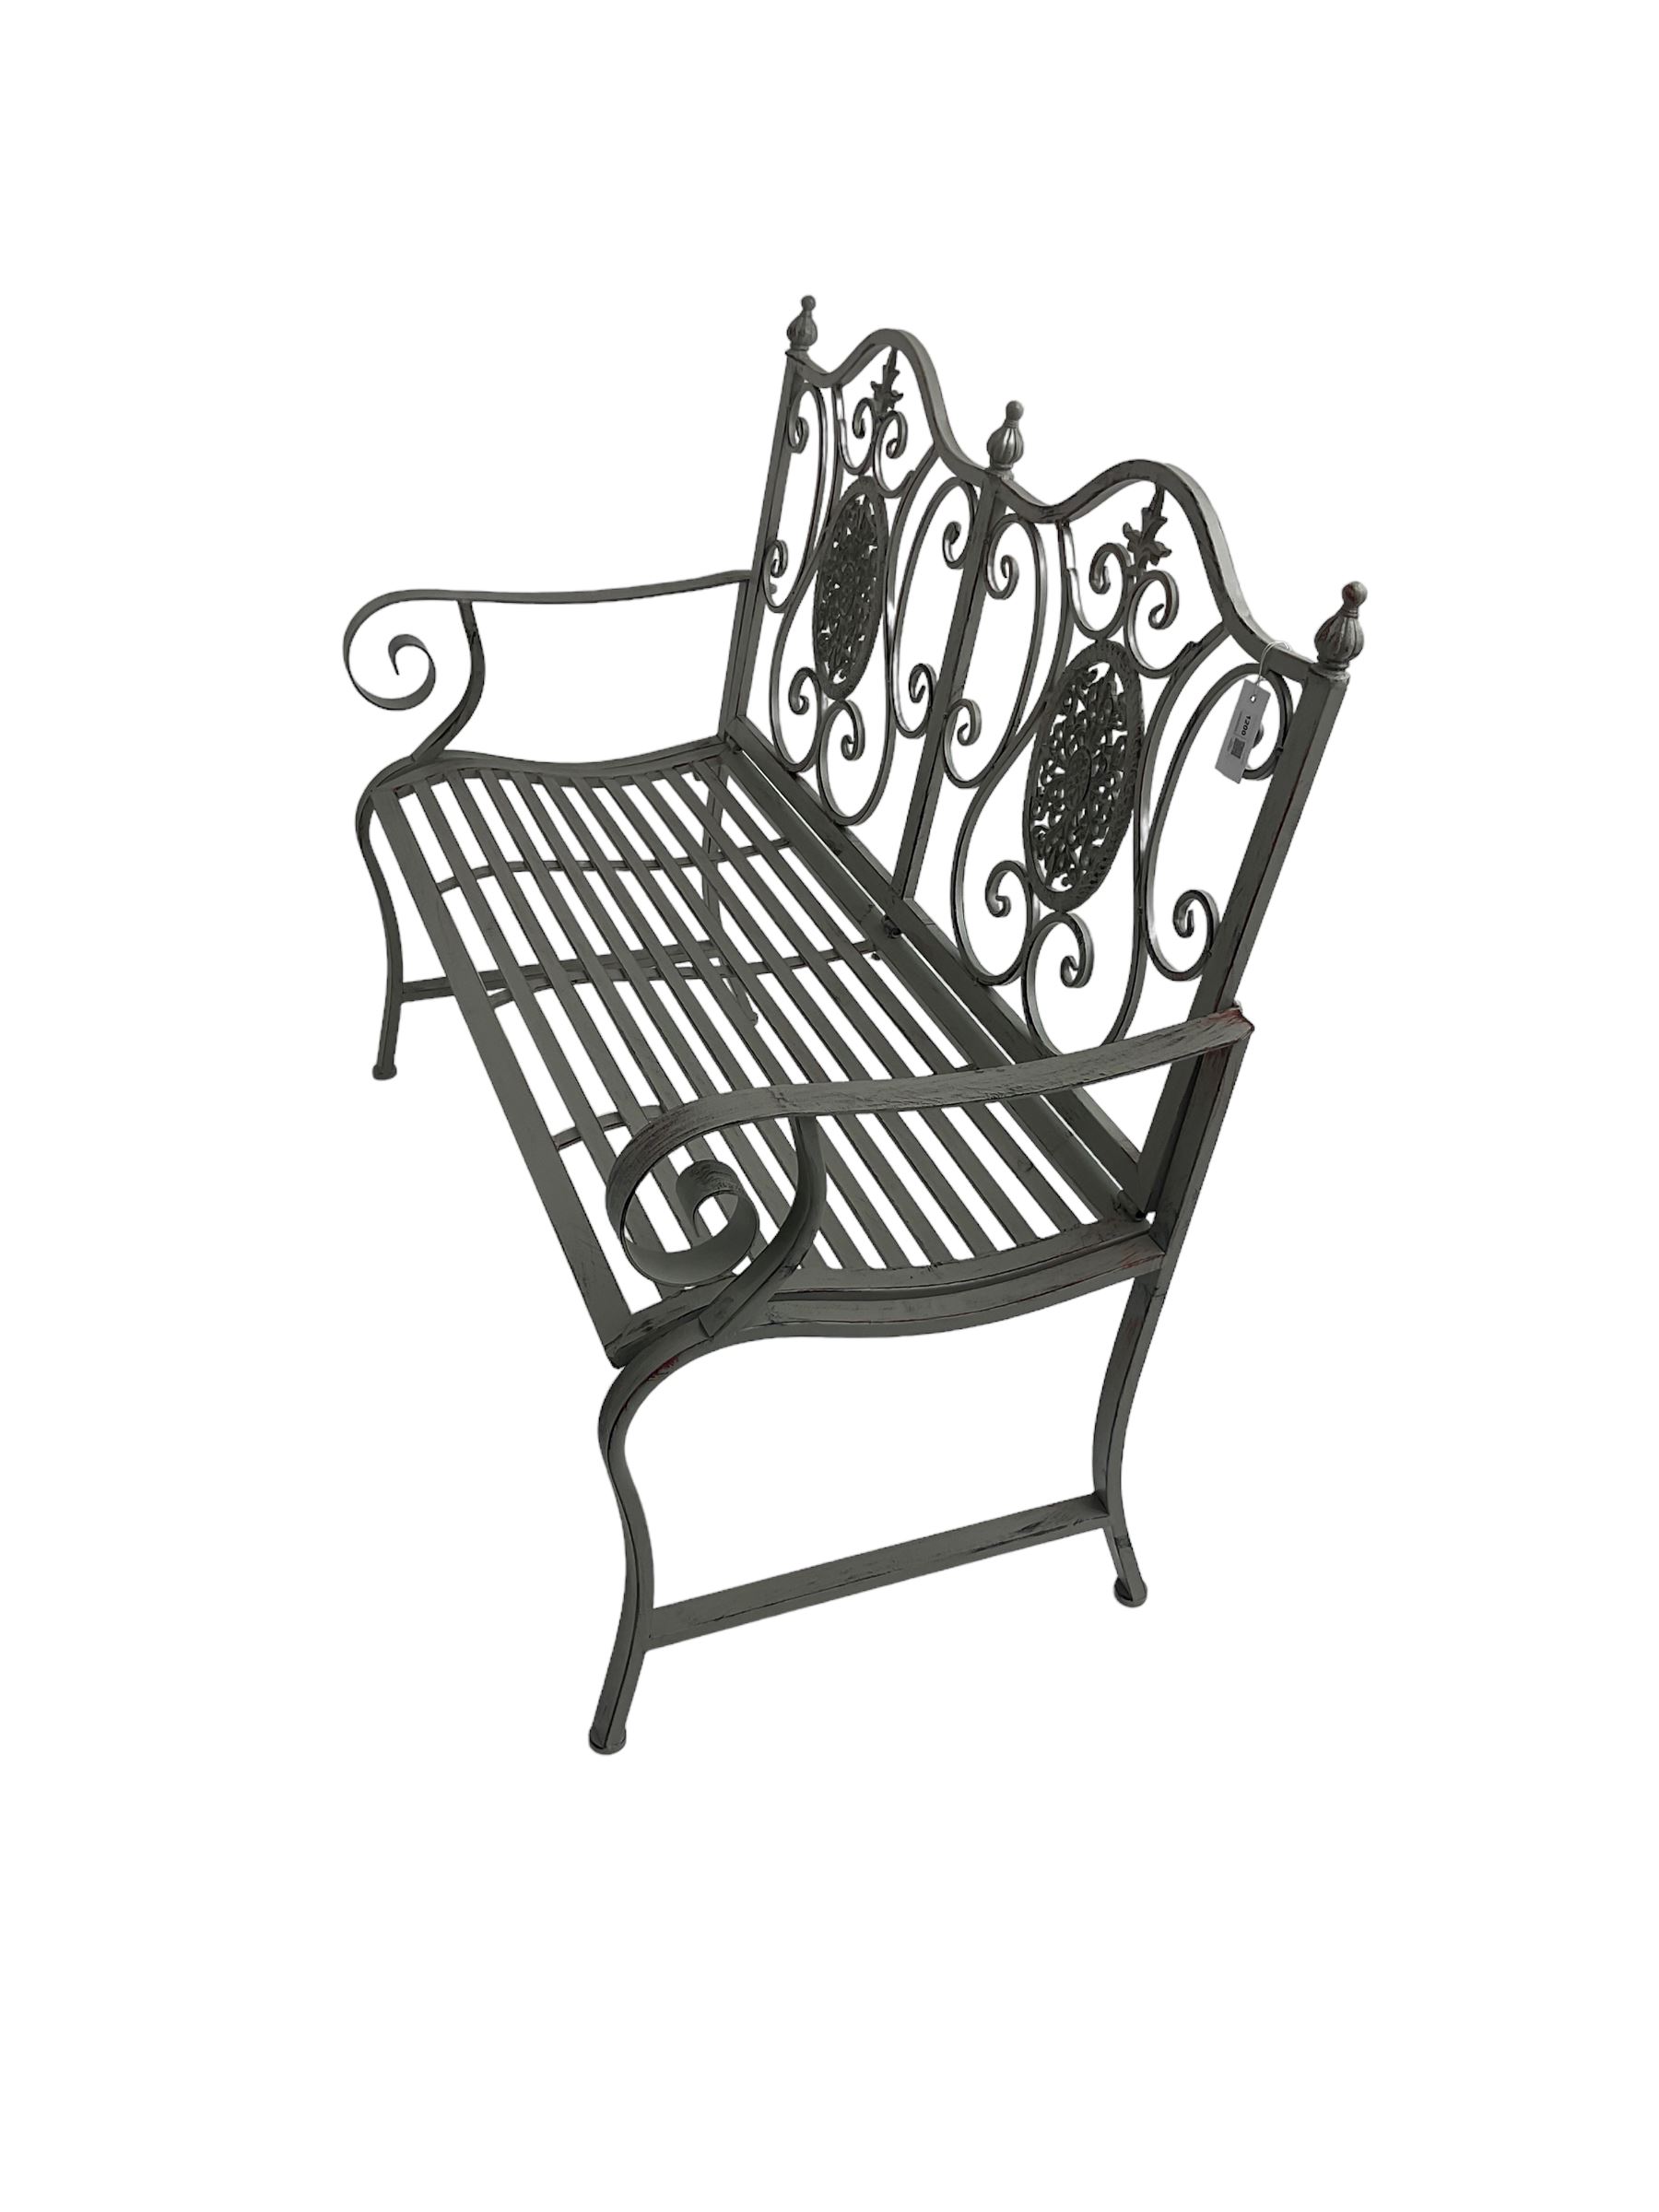 Regency design grey finish wrought metal two-seat bench - Image 5 of 7